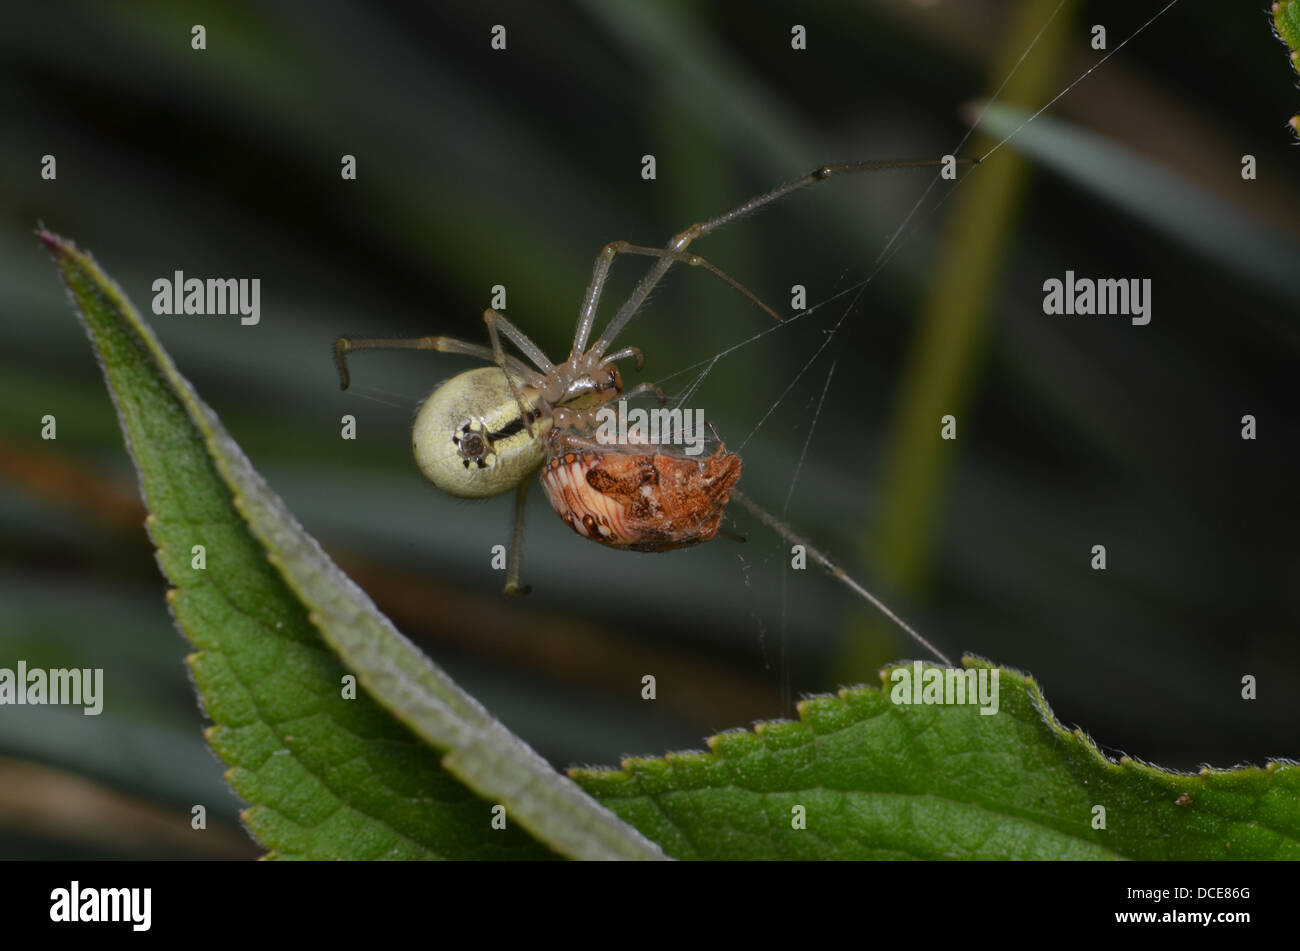 Green Garden spider assaporerete gioiello bug. Foto Stock